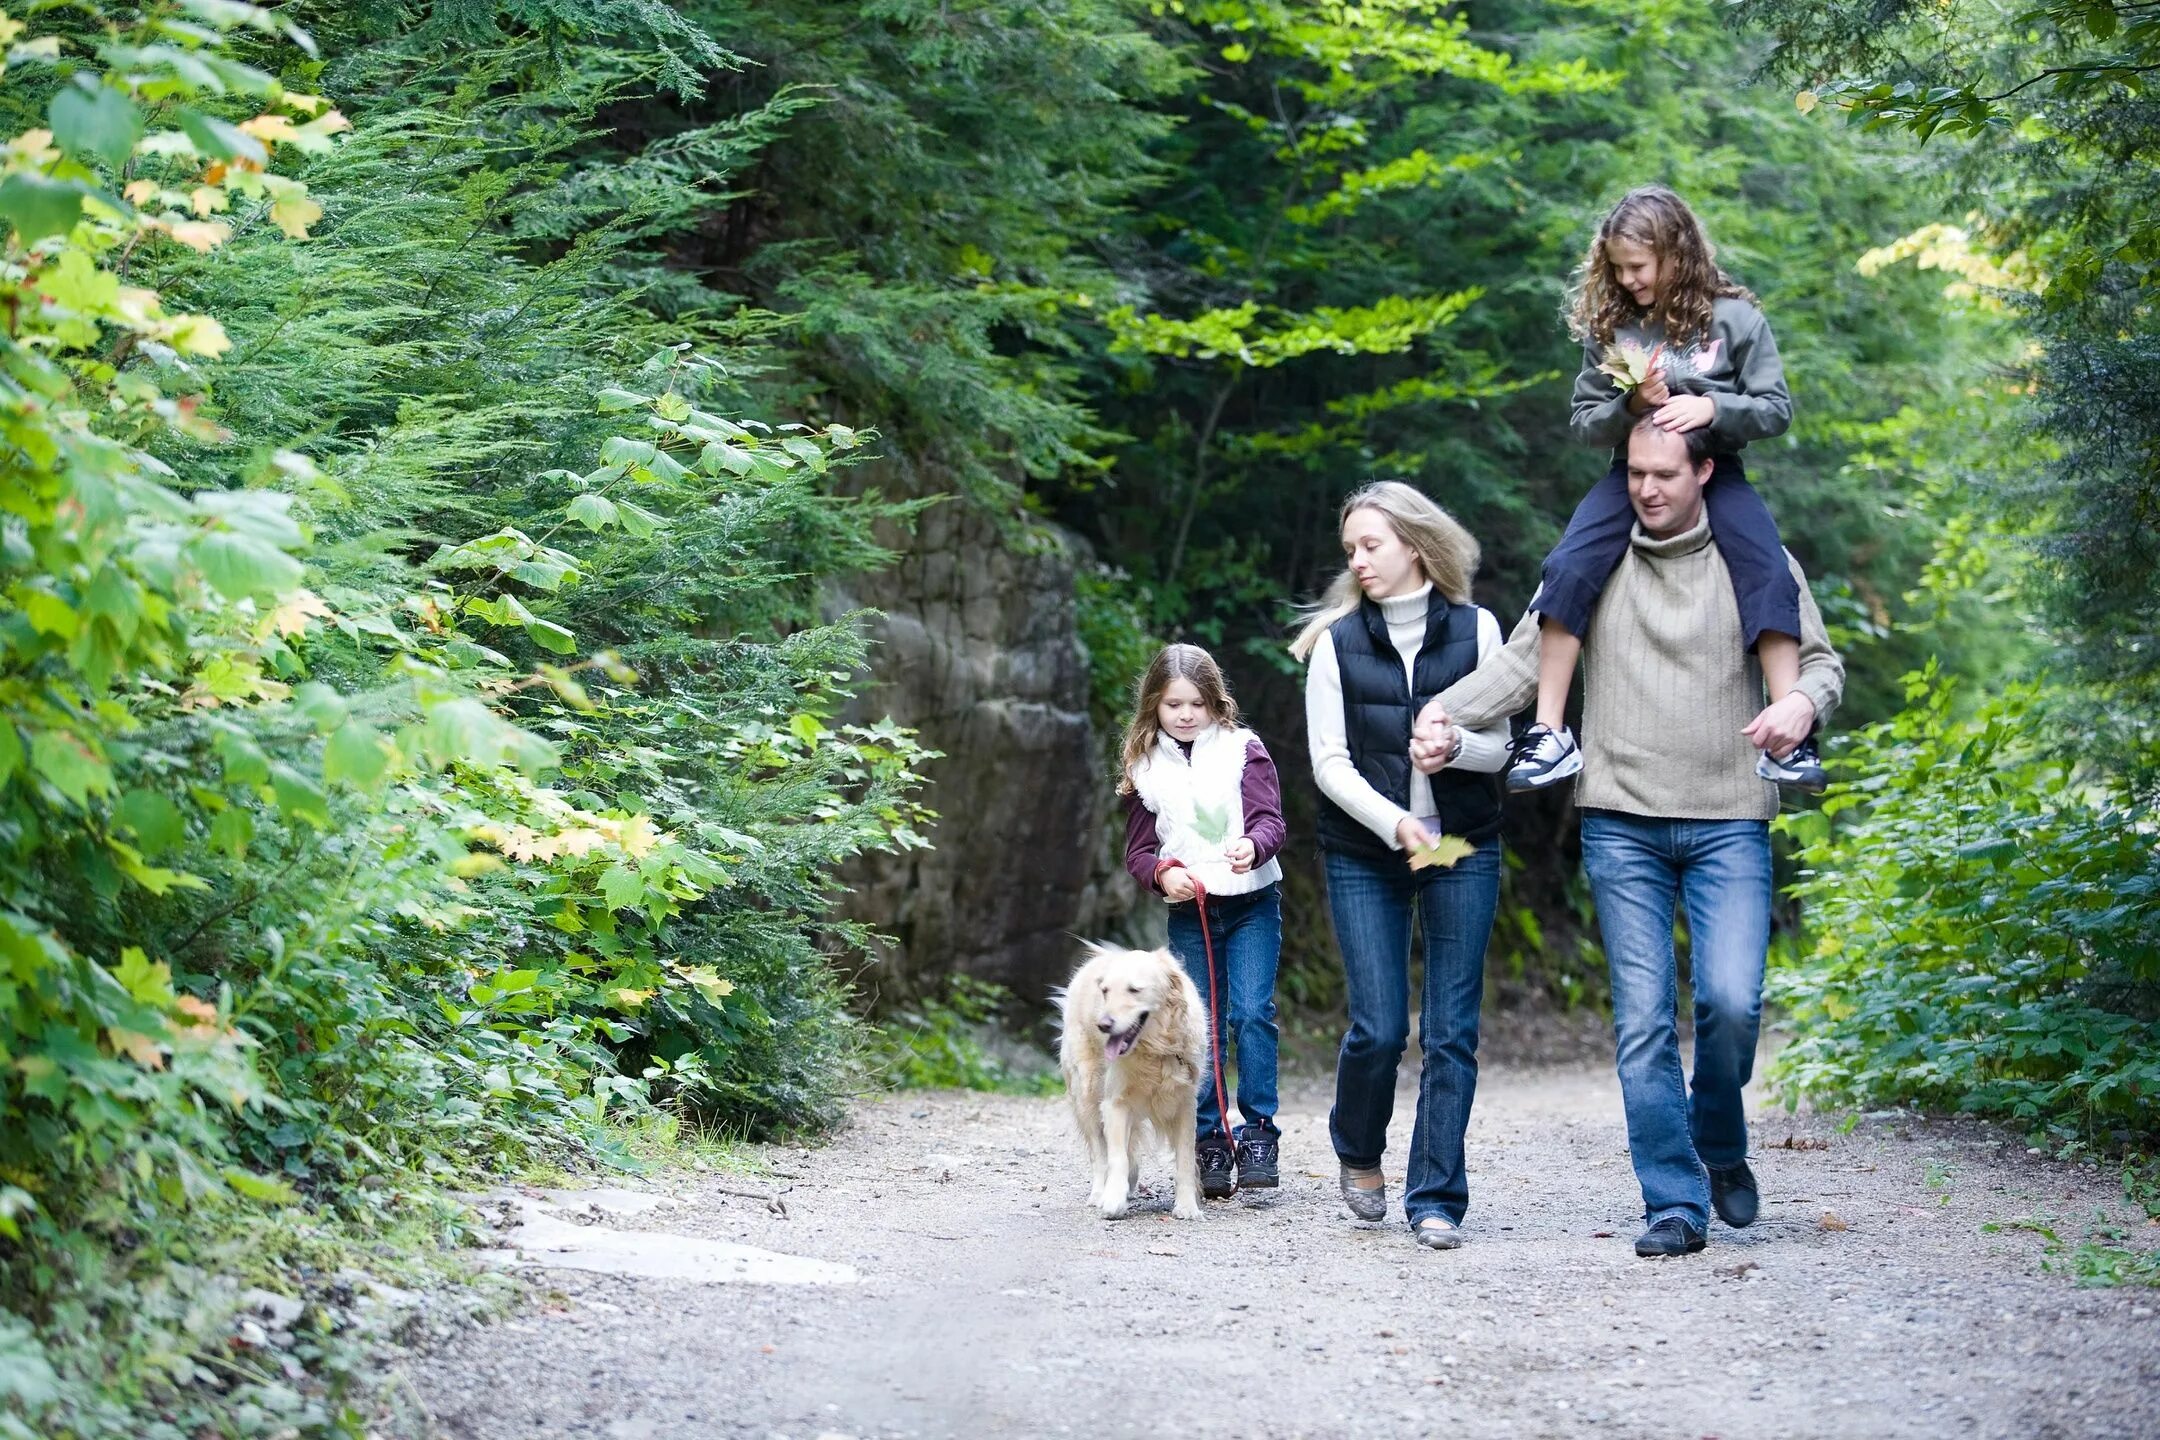 Прогулка на природе. Прогулка в лесу. Семья на прогулке. Пешие прогулки на природе.